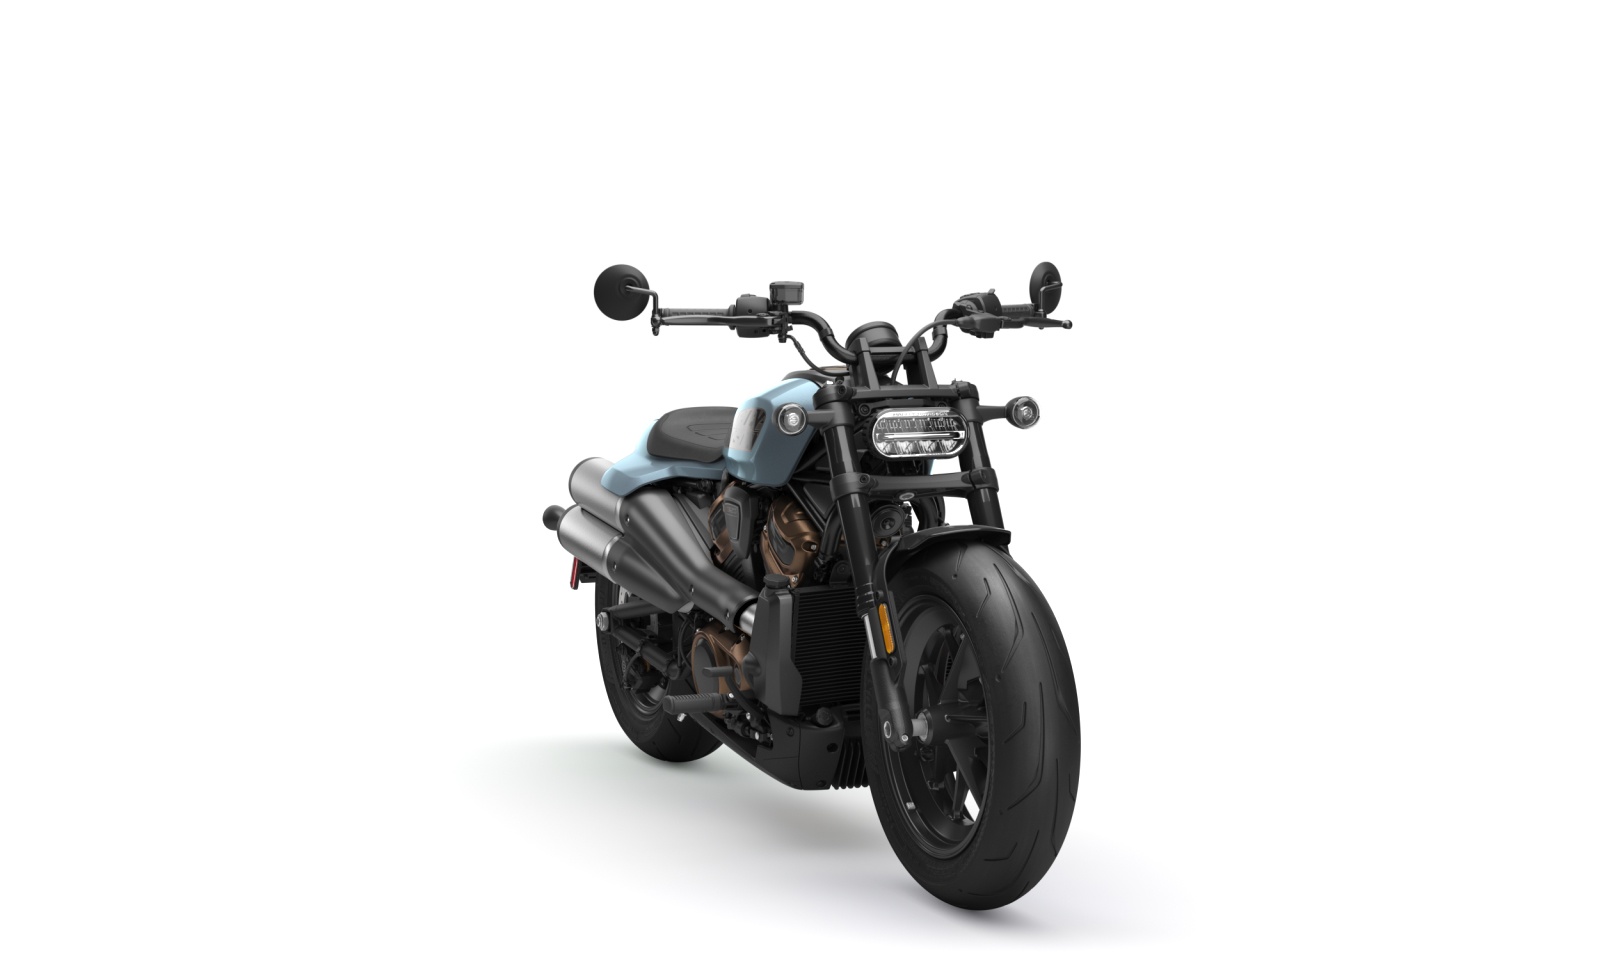 2024 Sportster S Motorcycle | Harley-Davidson USA